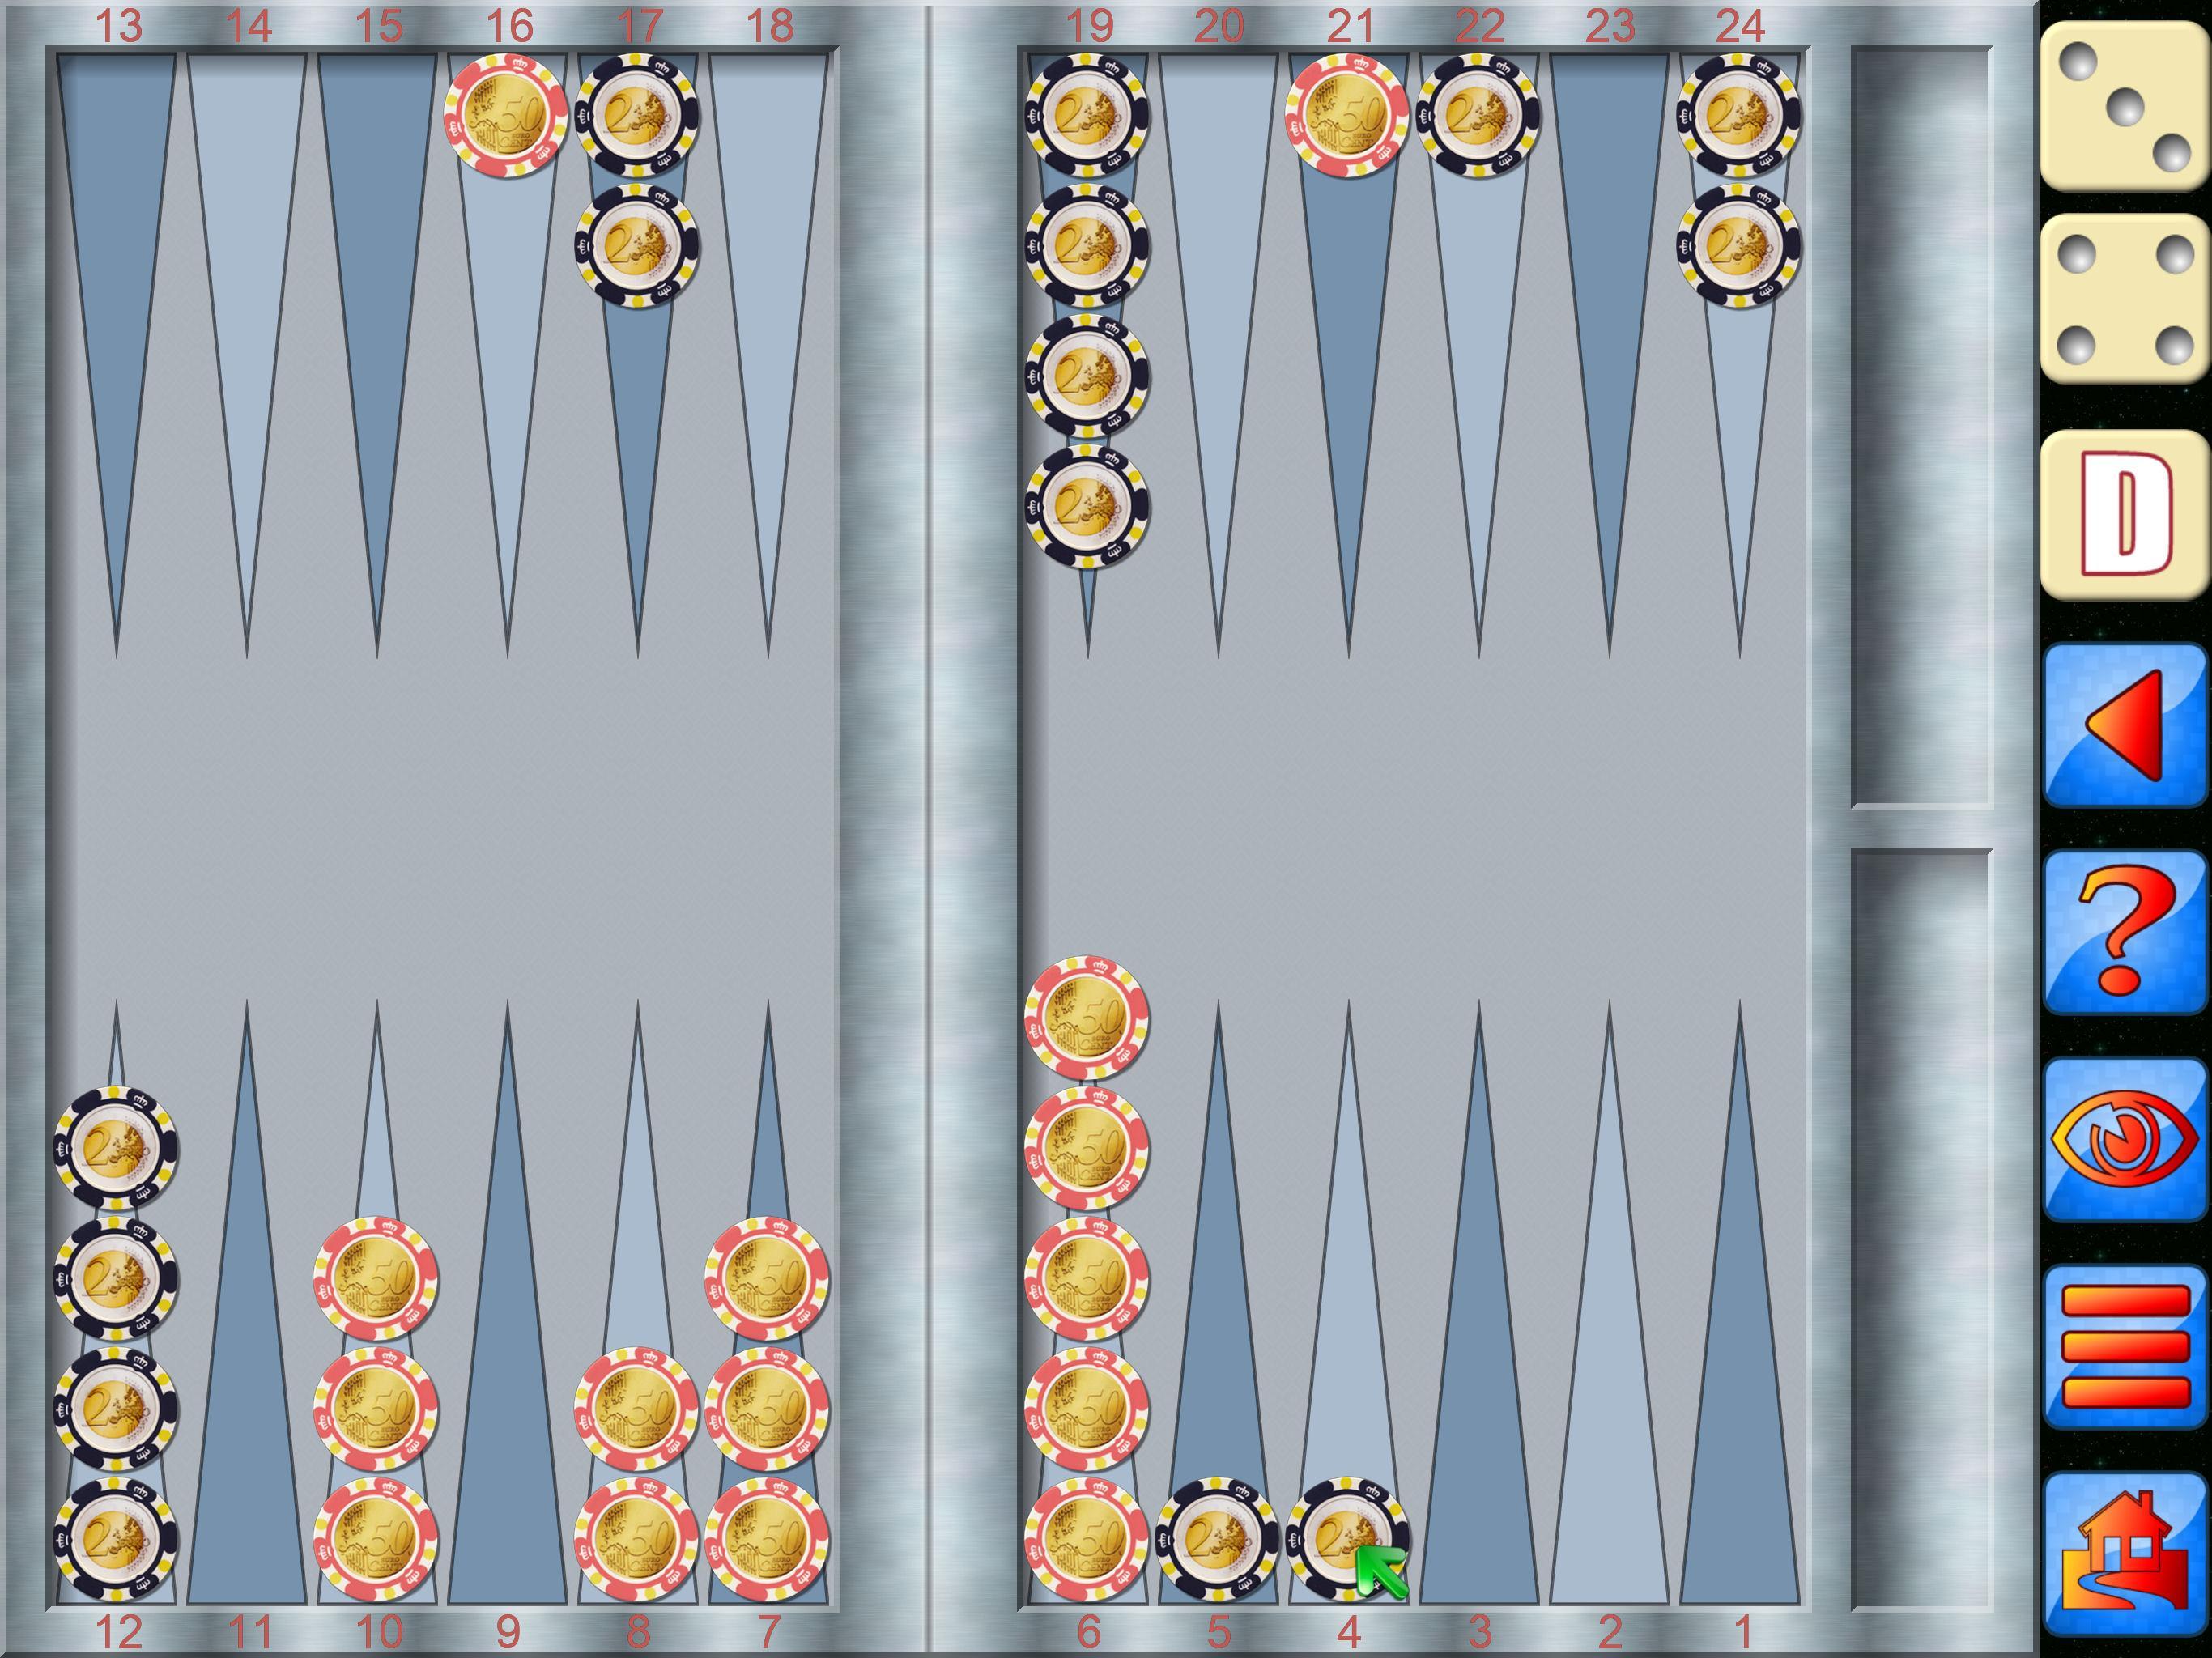 Backgammon V+, online multiplayer backgammon 5.25.64 Screenshot 9